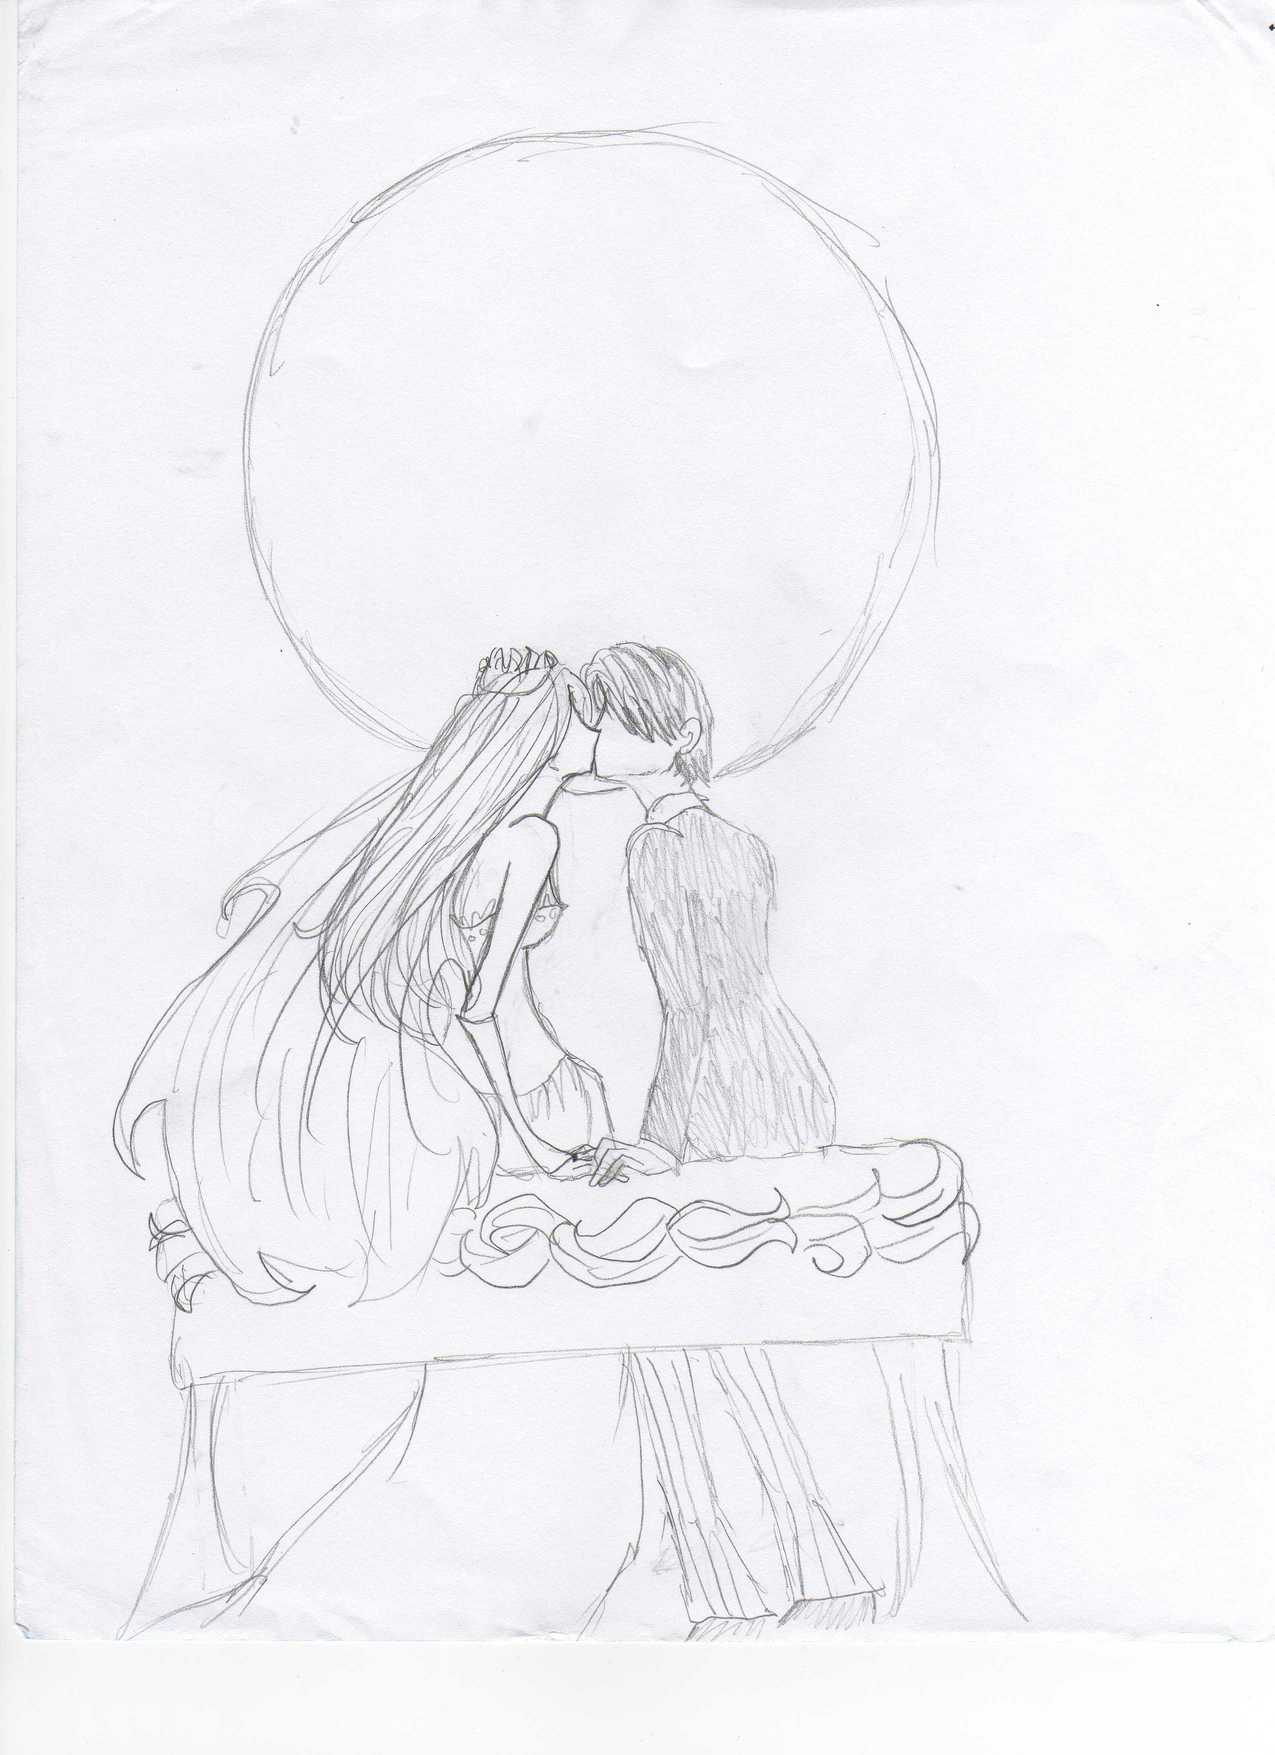 Moonlight kiss by CBrideEmily